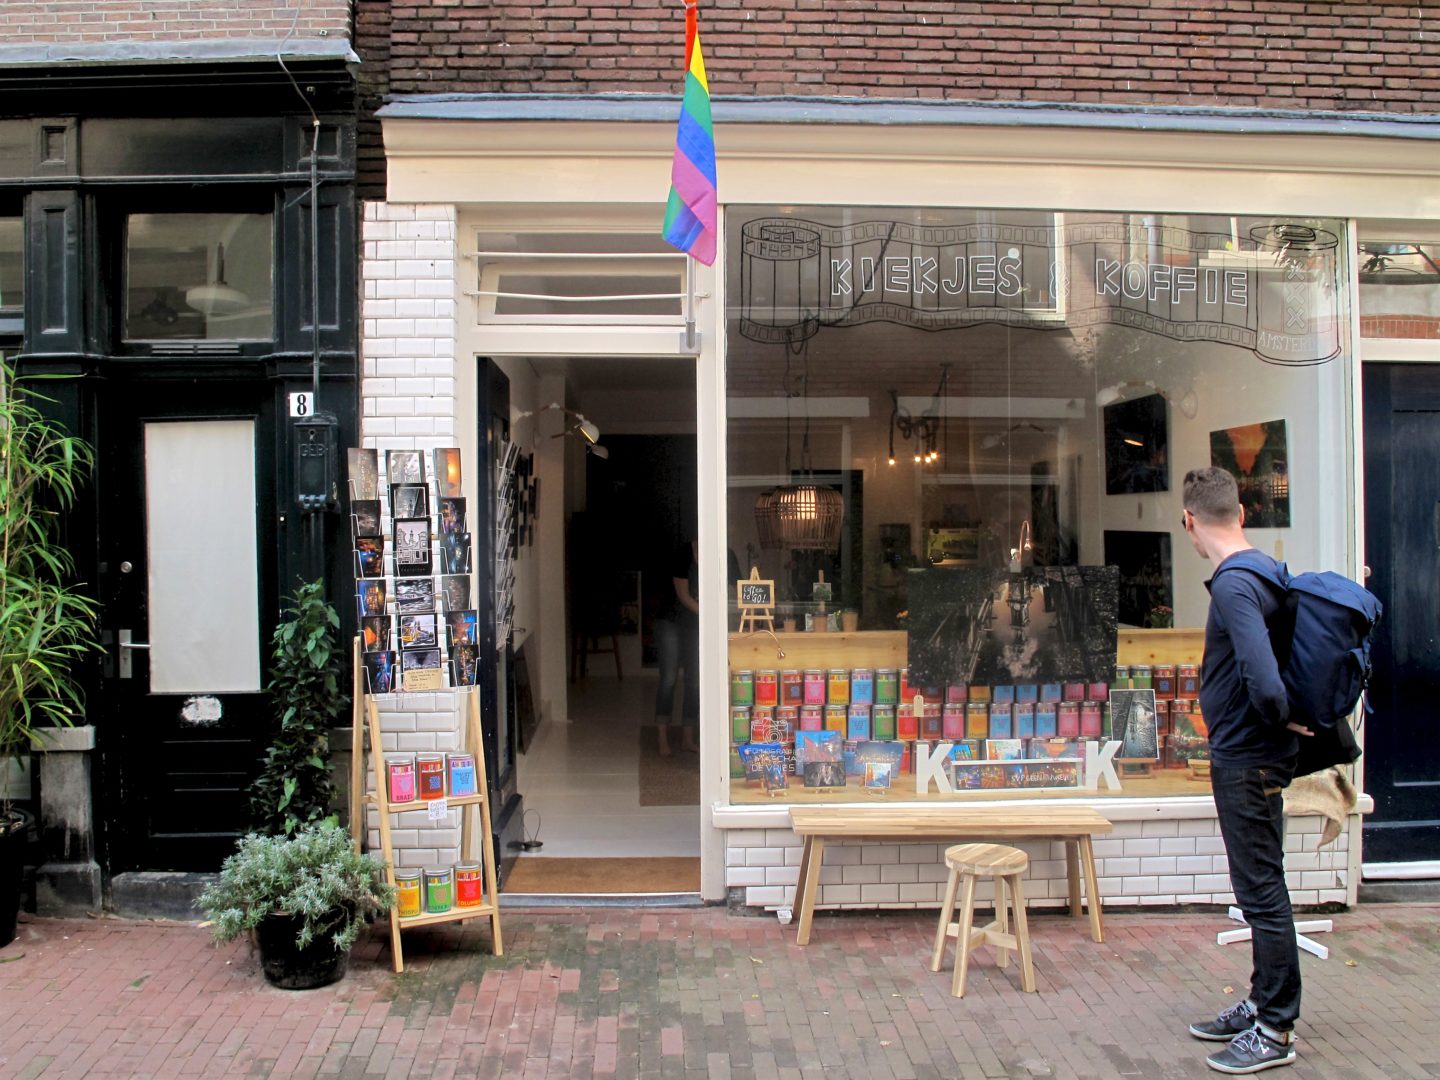 LGBTQI+ neighbourhoods of Amsterdam